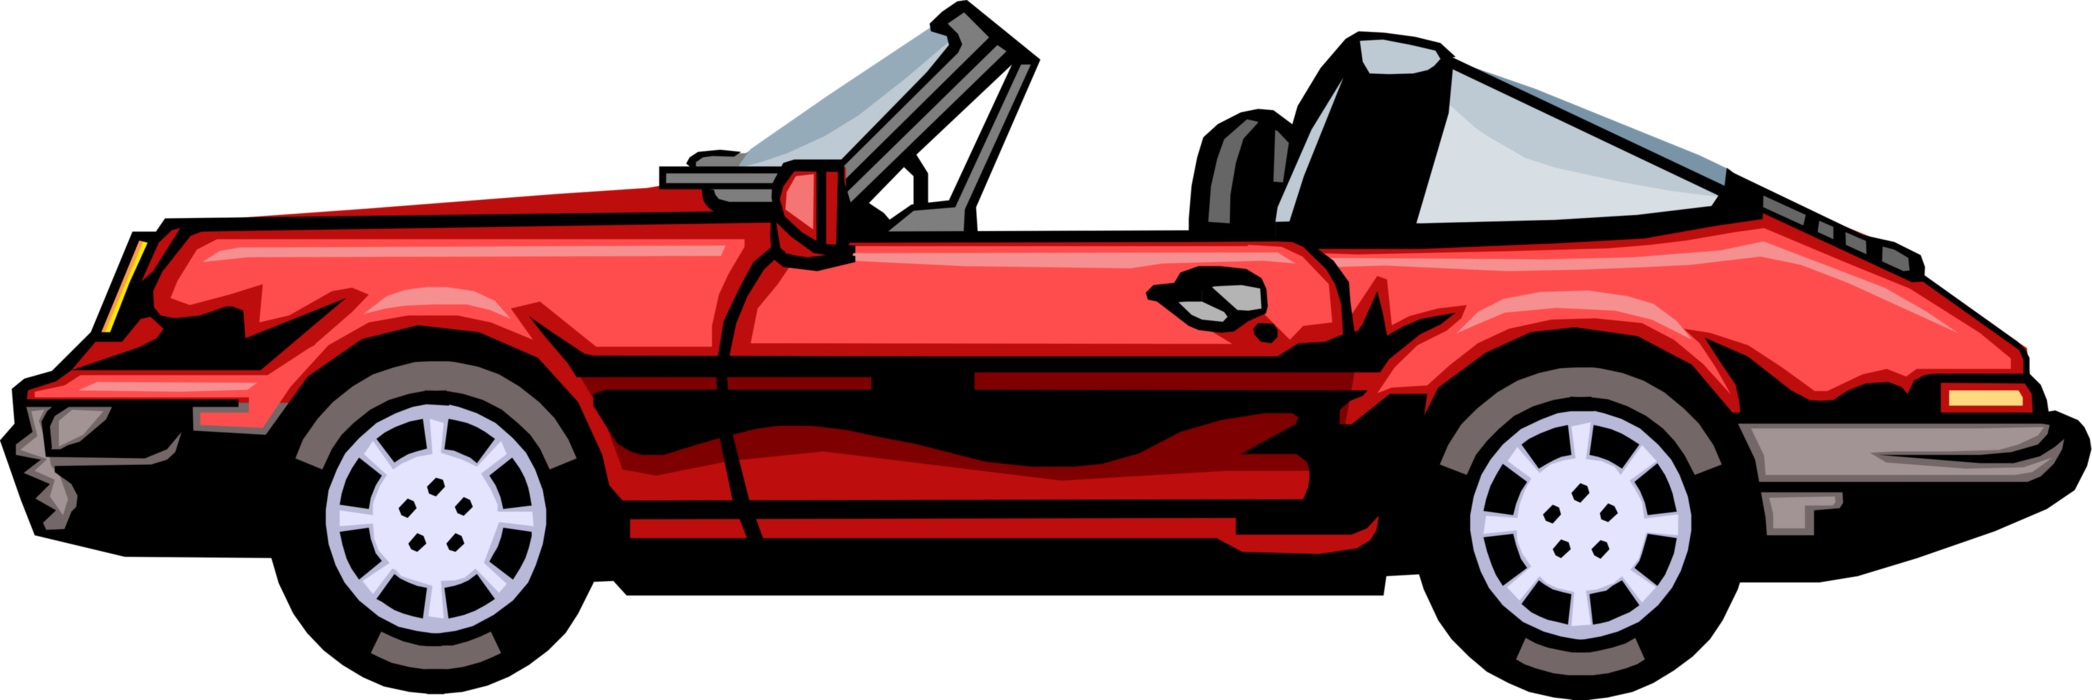 Vector Illustration of Porsche Convertible Sports Car Automobile Motor Vehicle